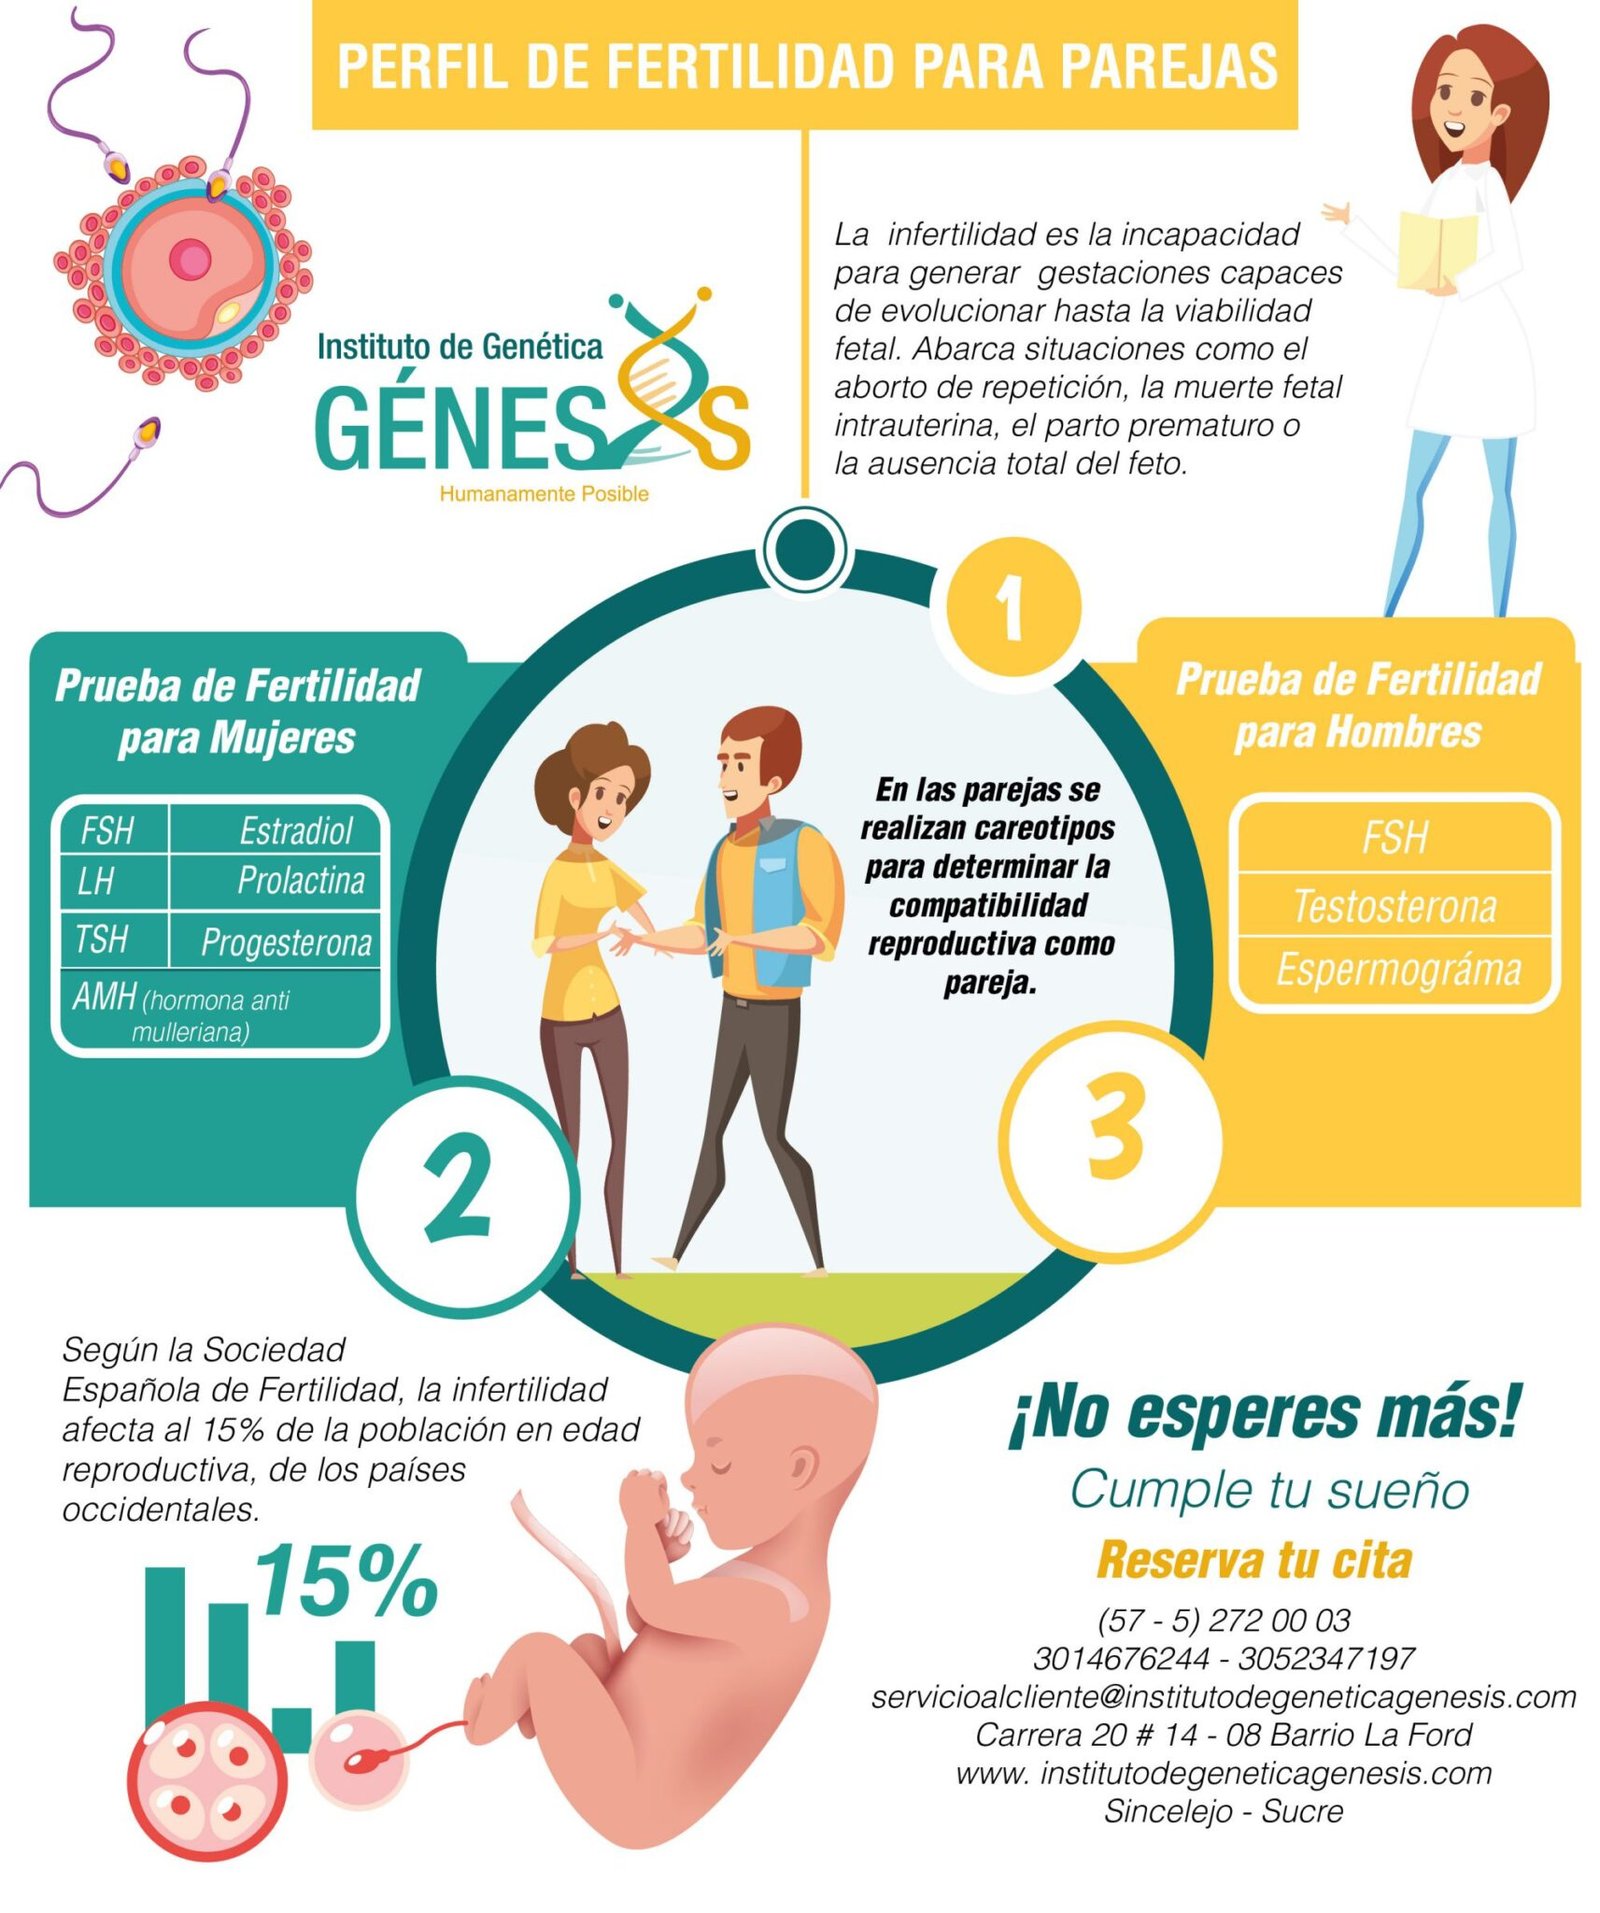 Perfil de fertilidad para parejas | Instituto de Genética GÉNESIS